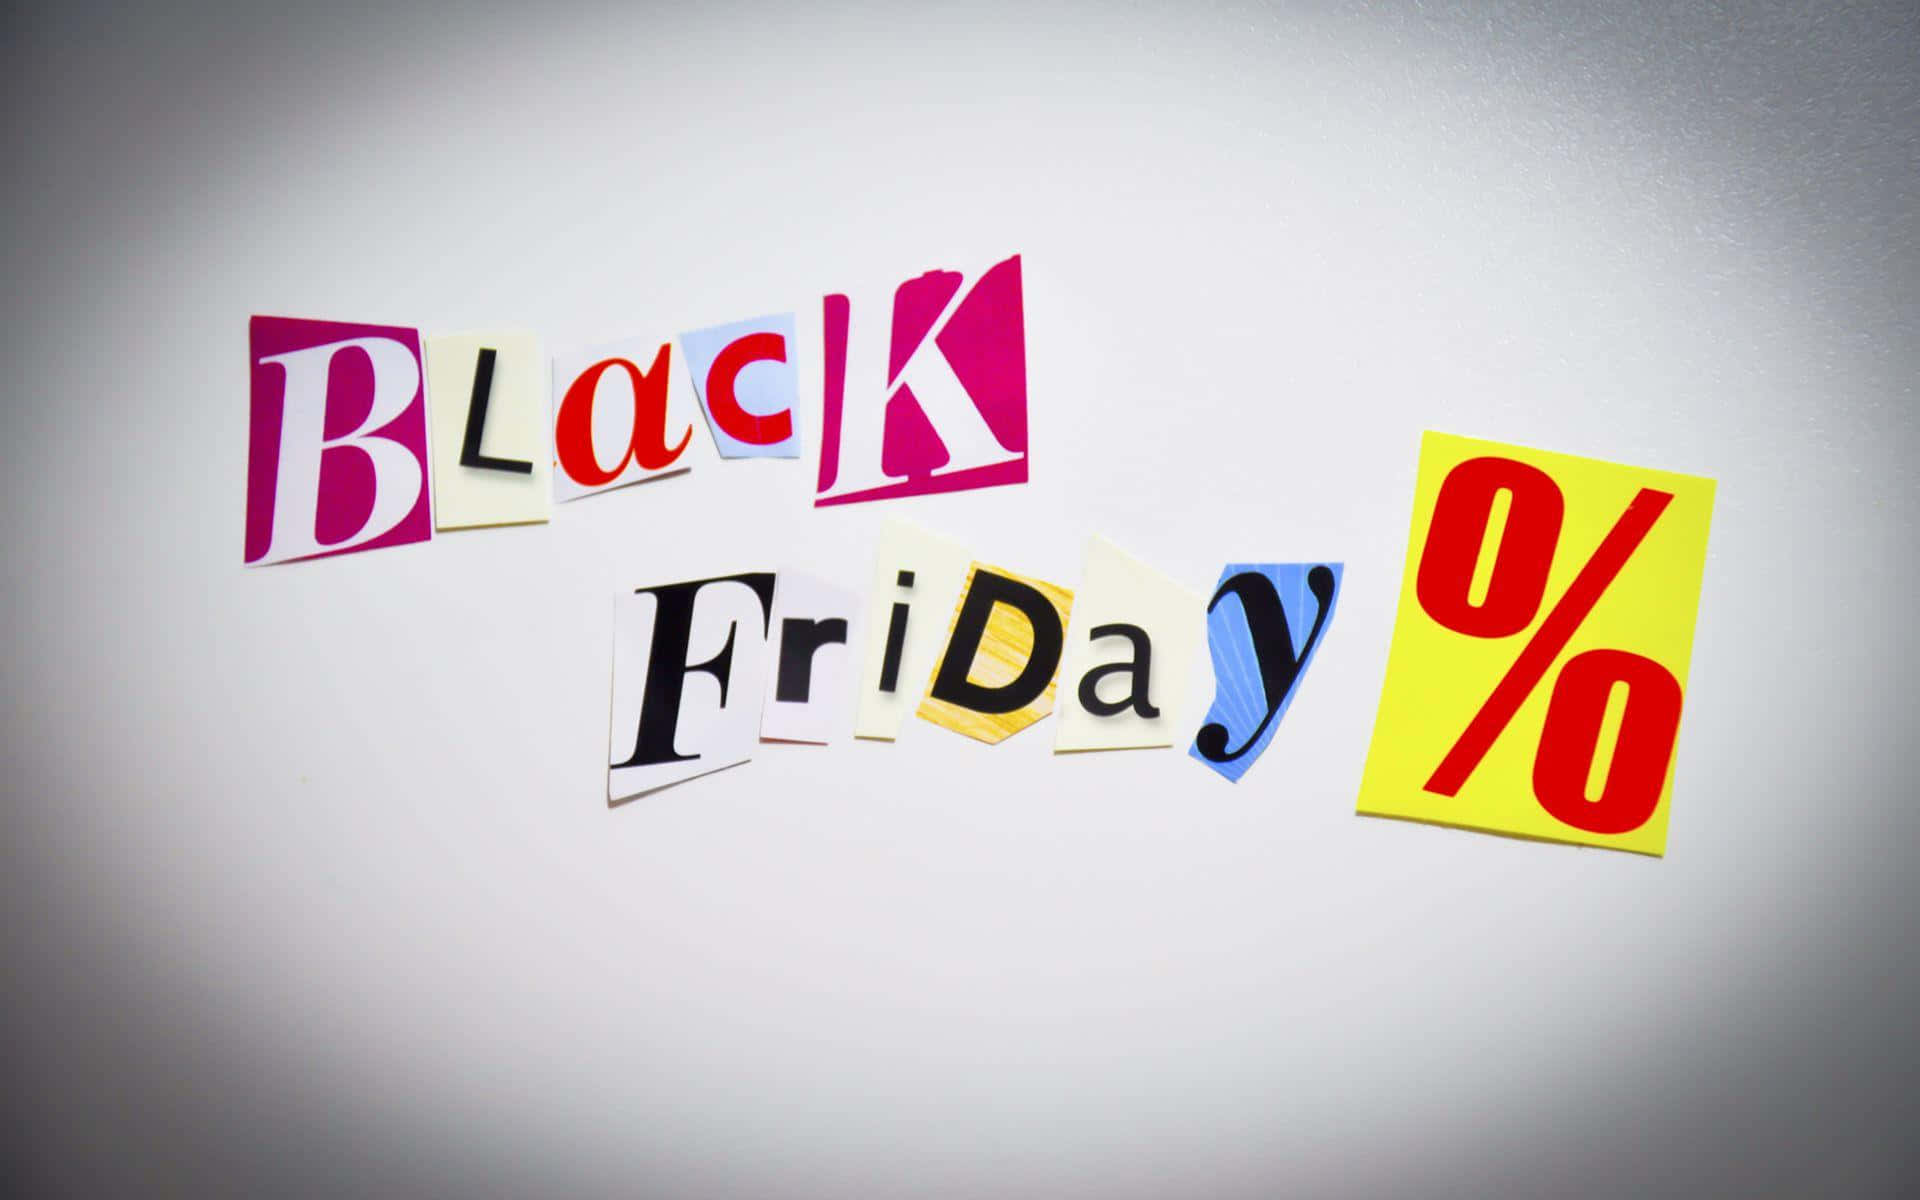 Black Friday Sale - A Black Friday Sale